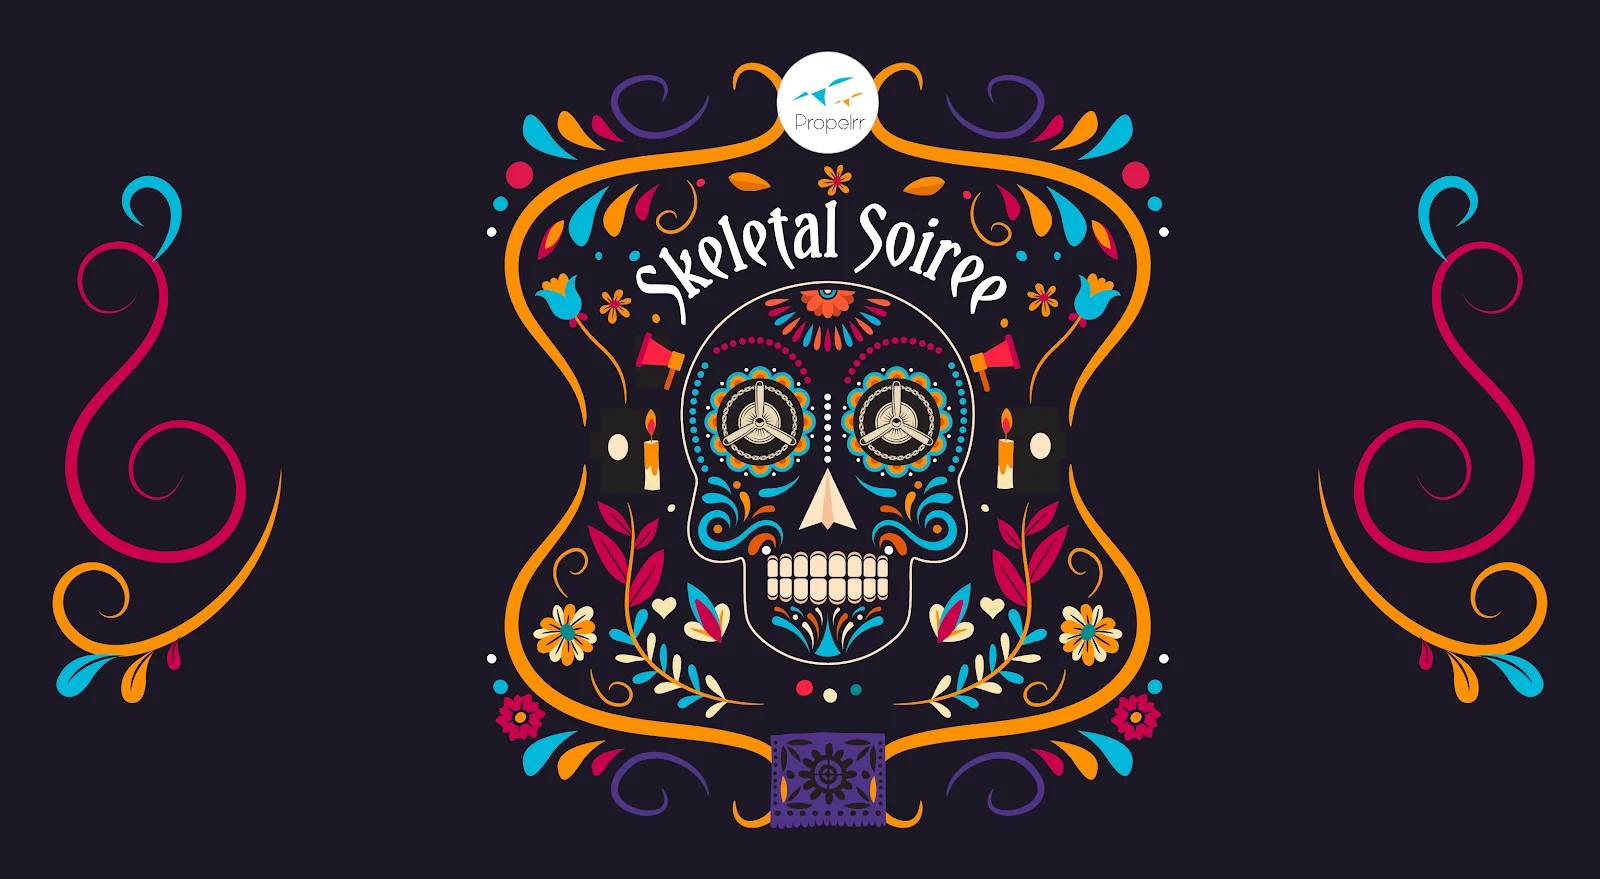 skeletal soiree logo